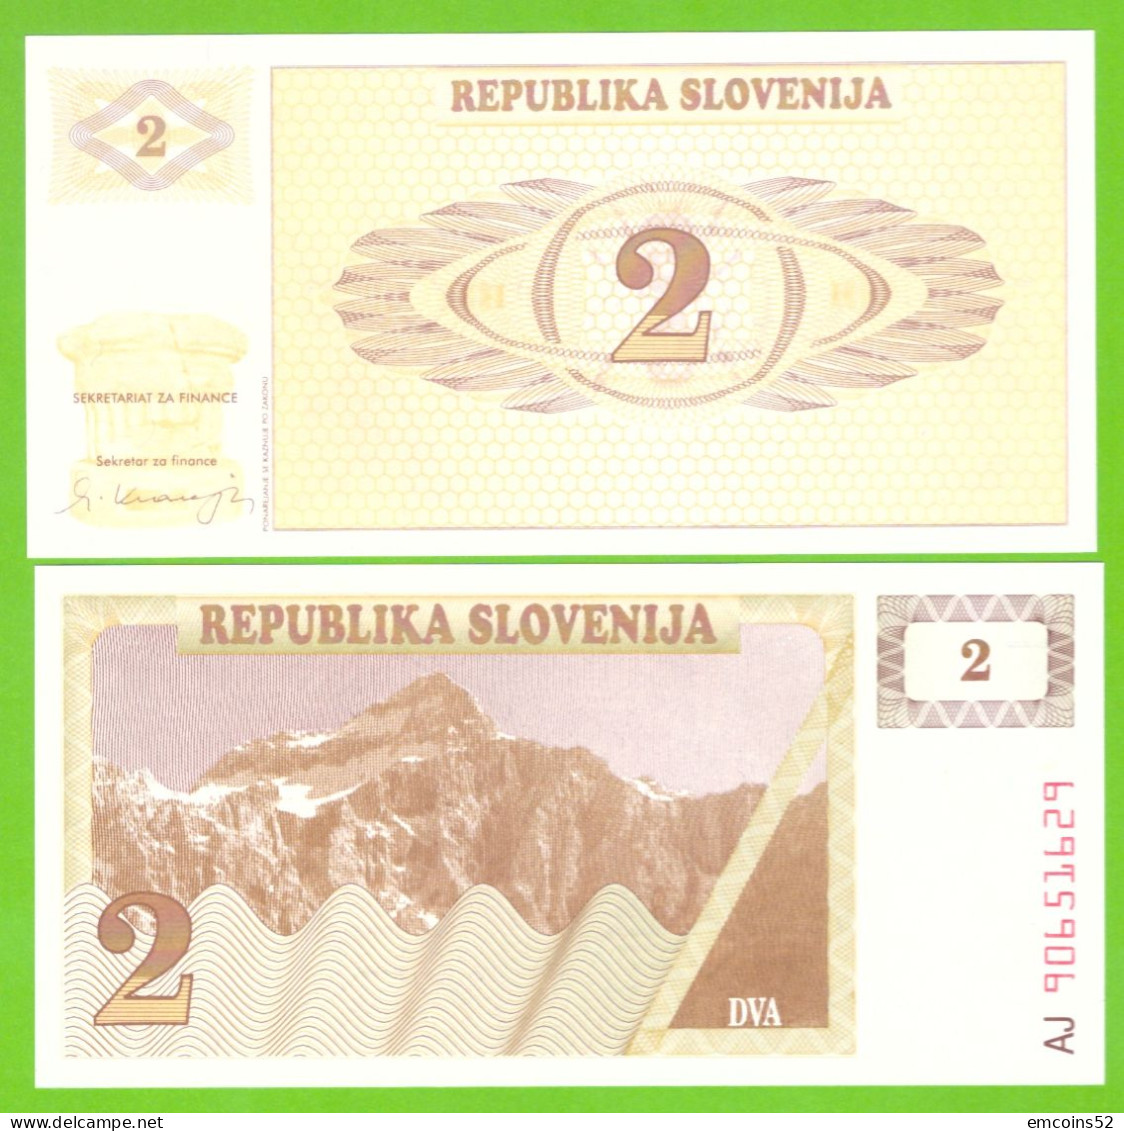 SLOVENIA 2 TOLARJA 1990 P-2 UNC - Slovenia